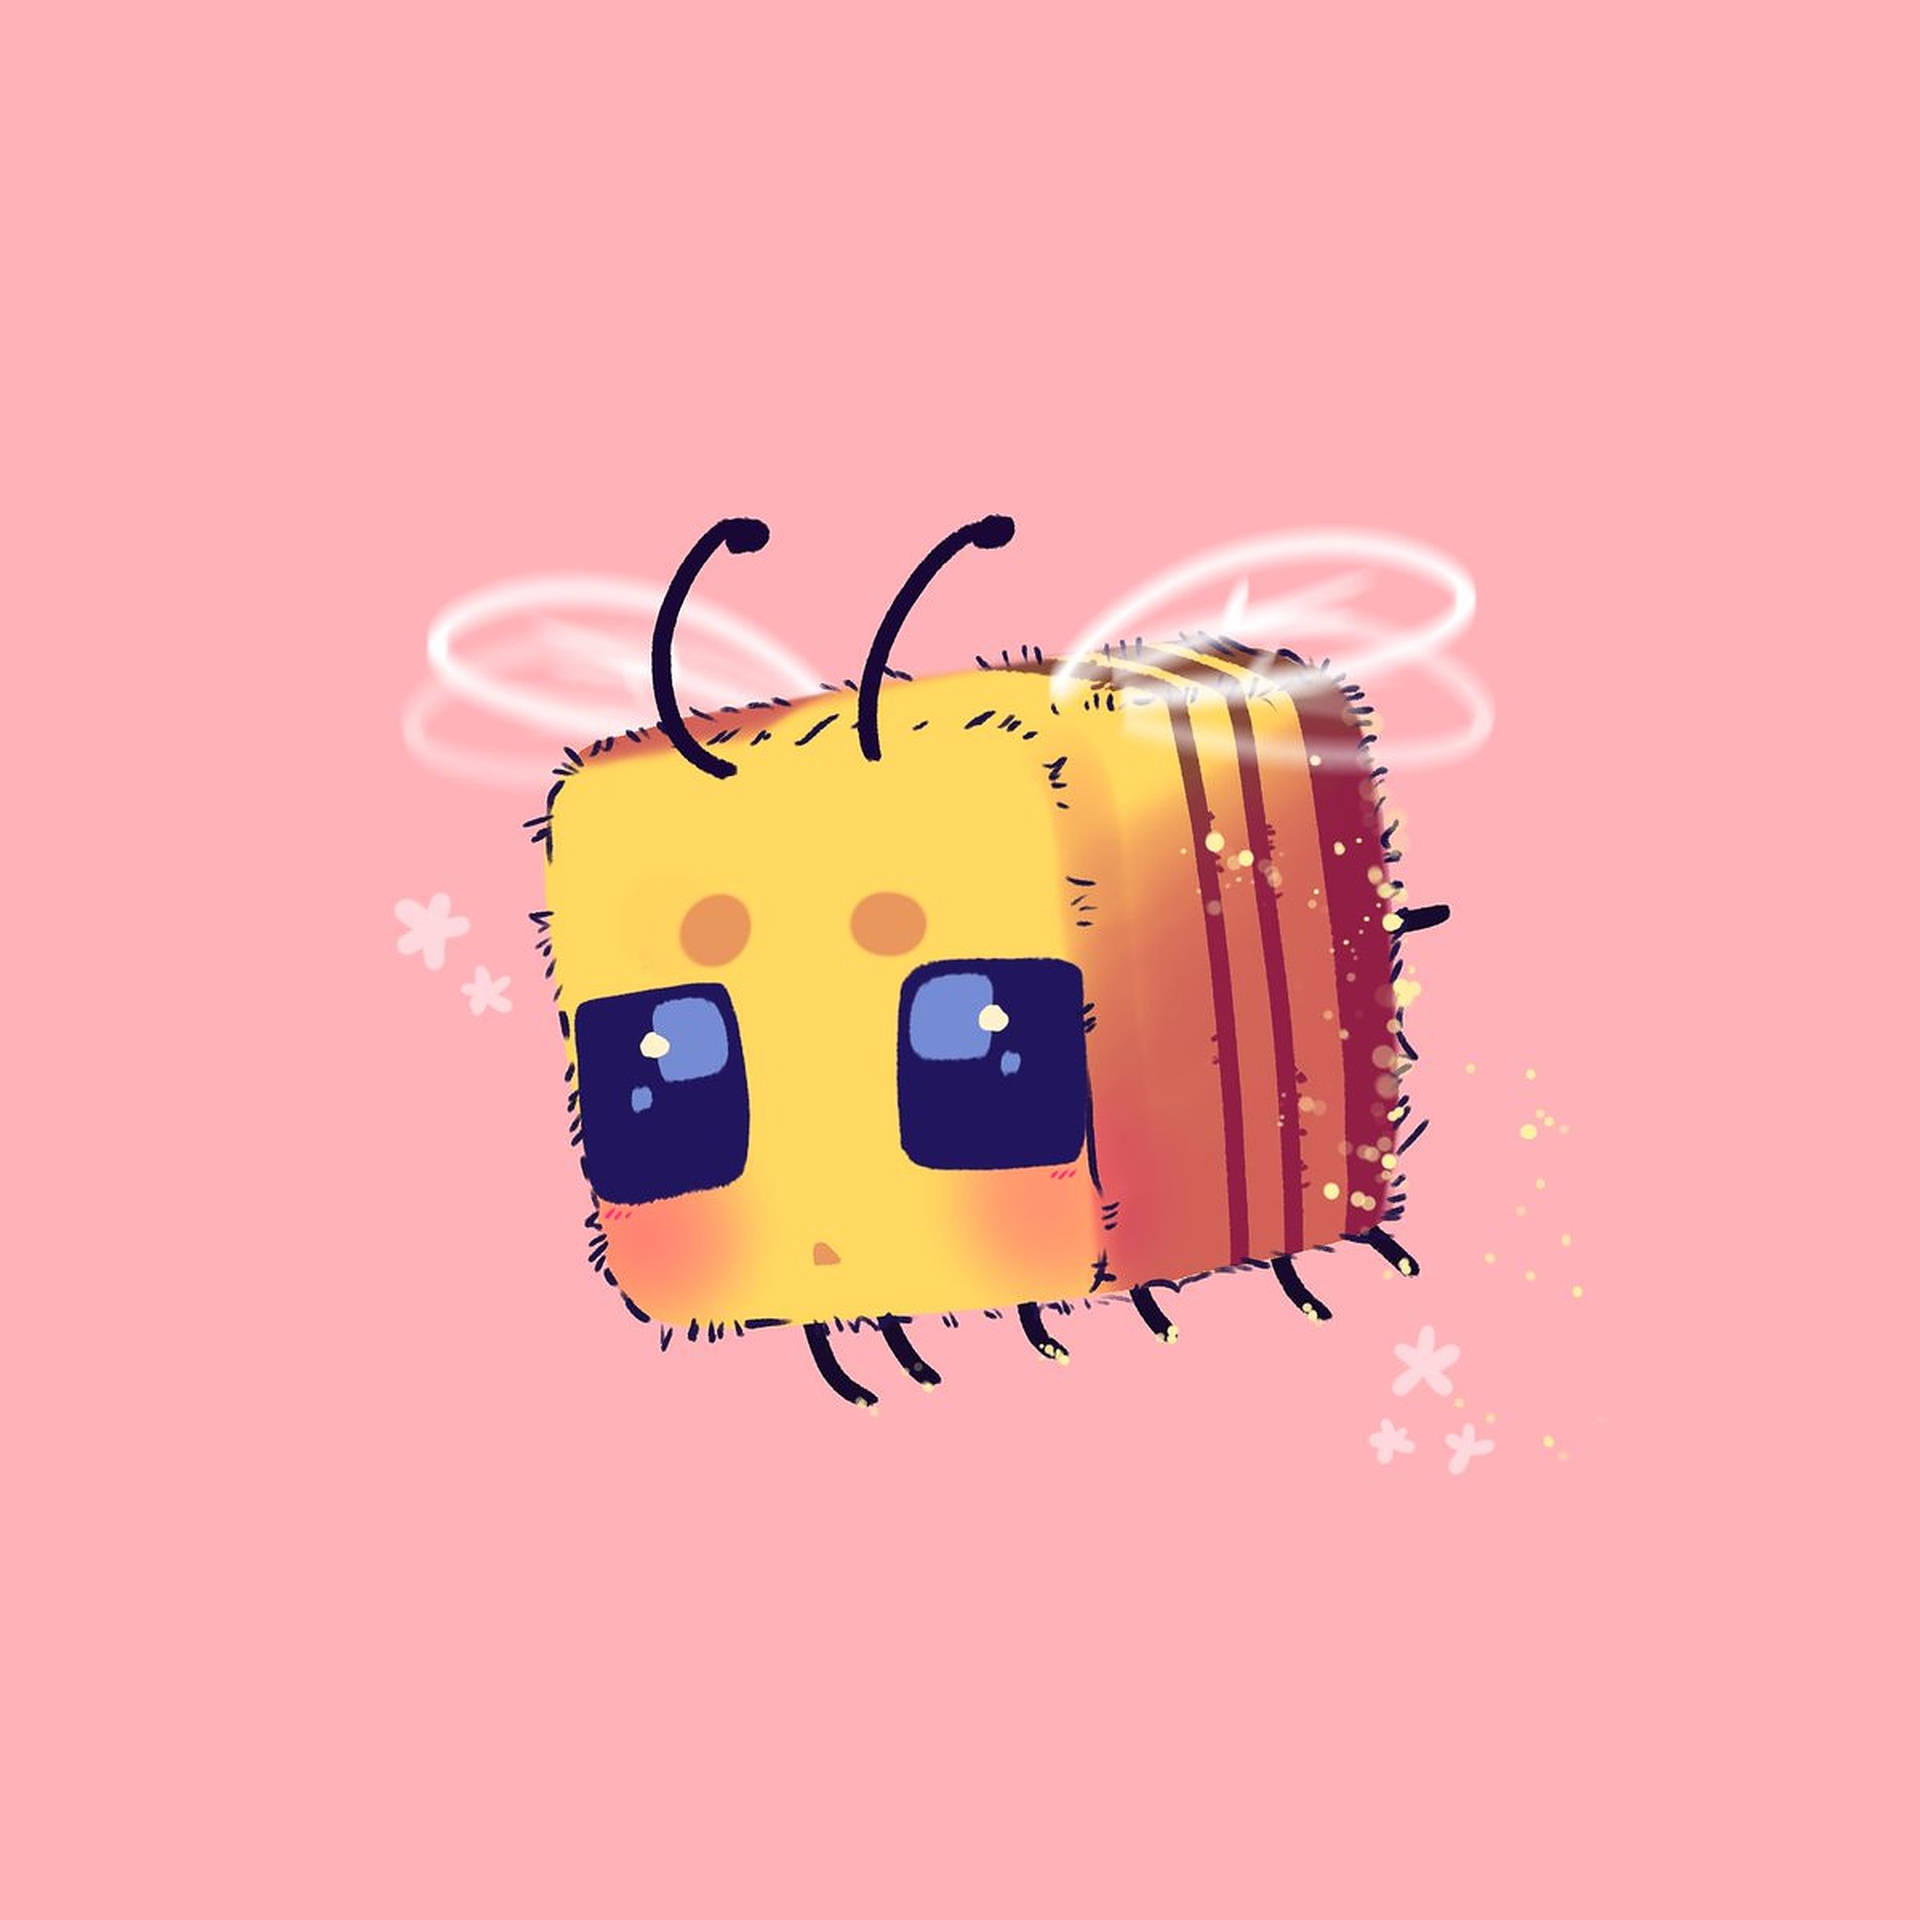 Sad Minecraft Bee Wallpaper